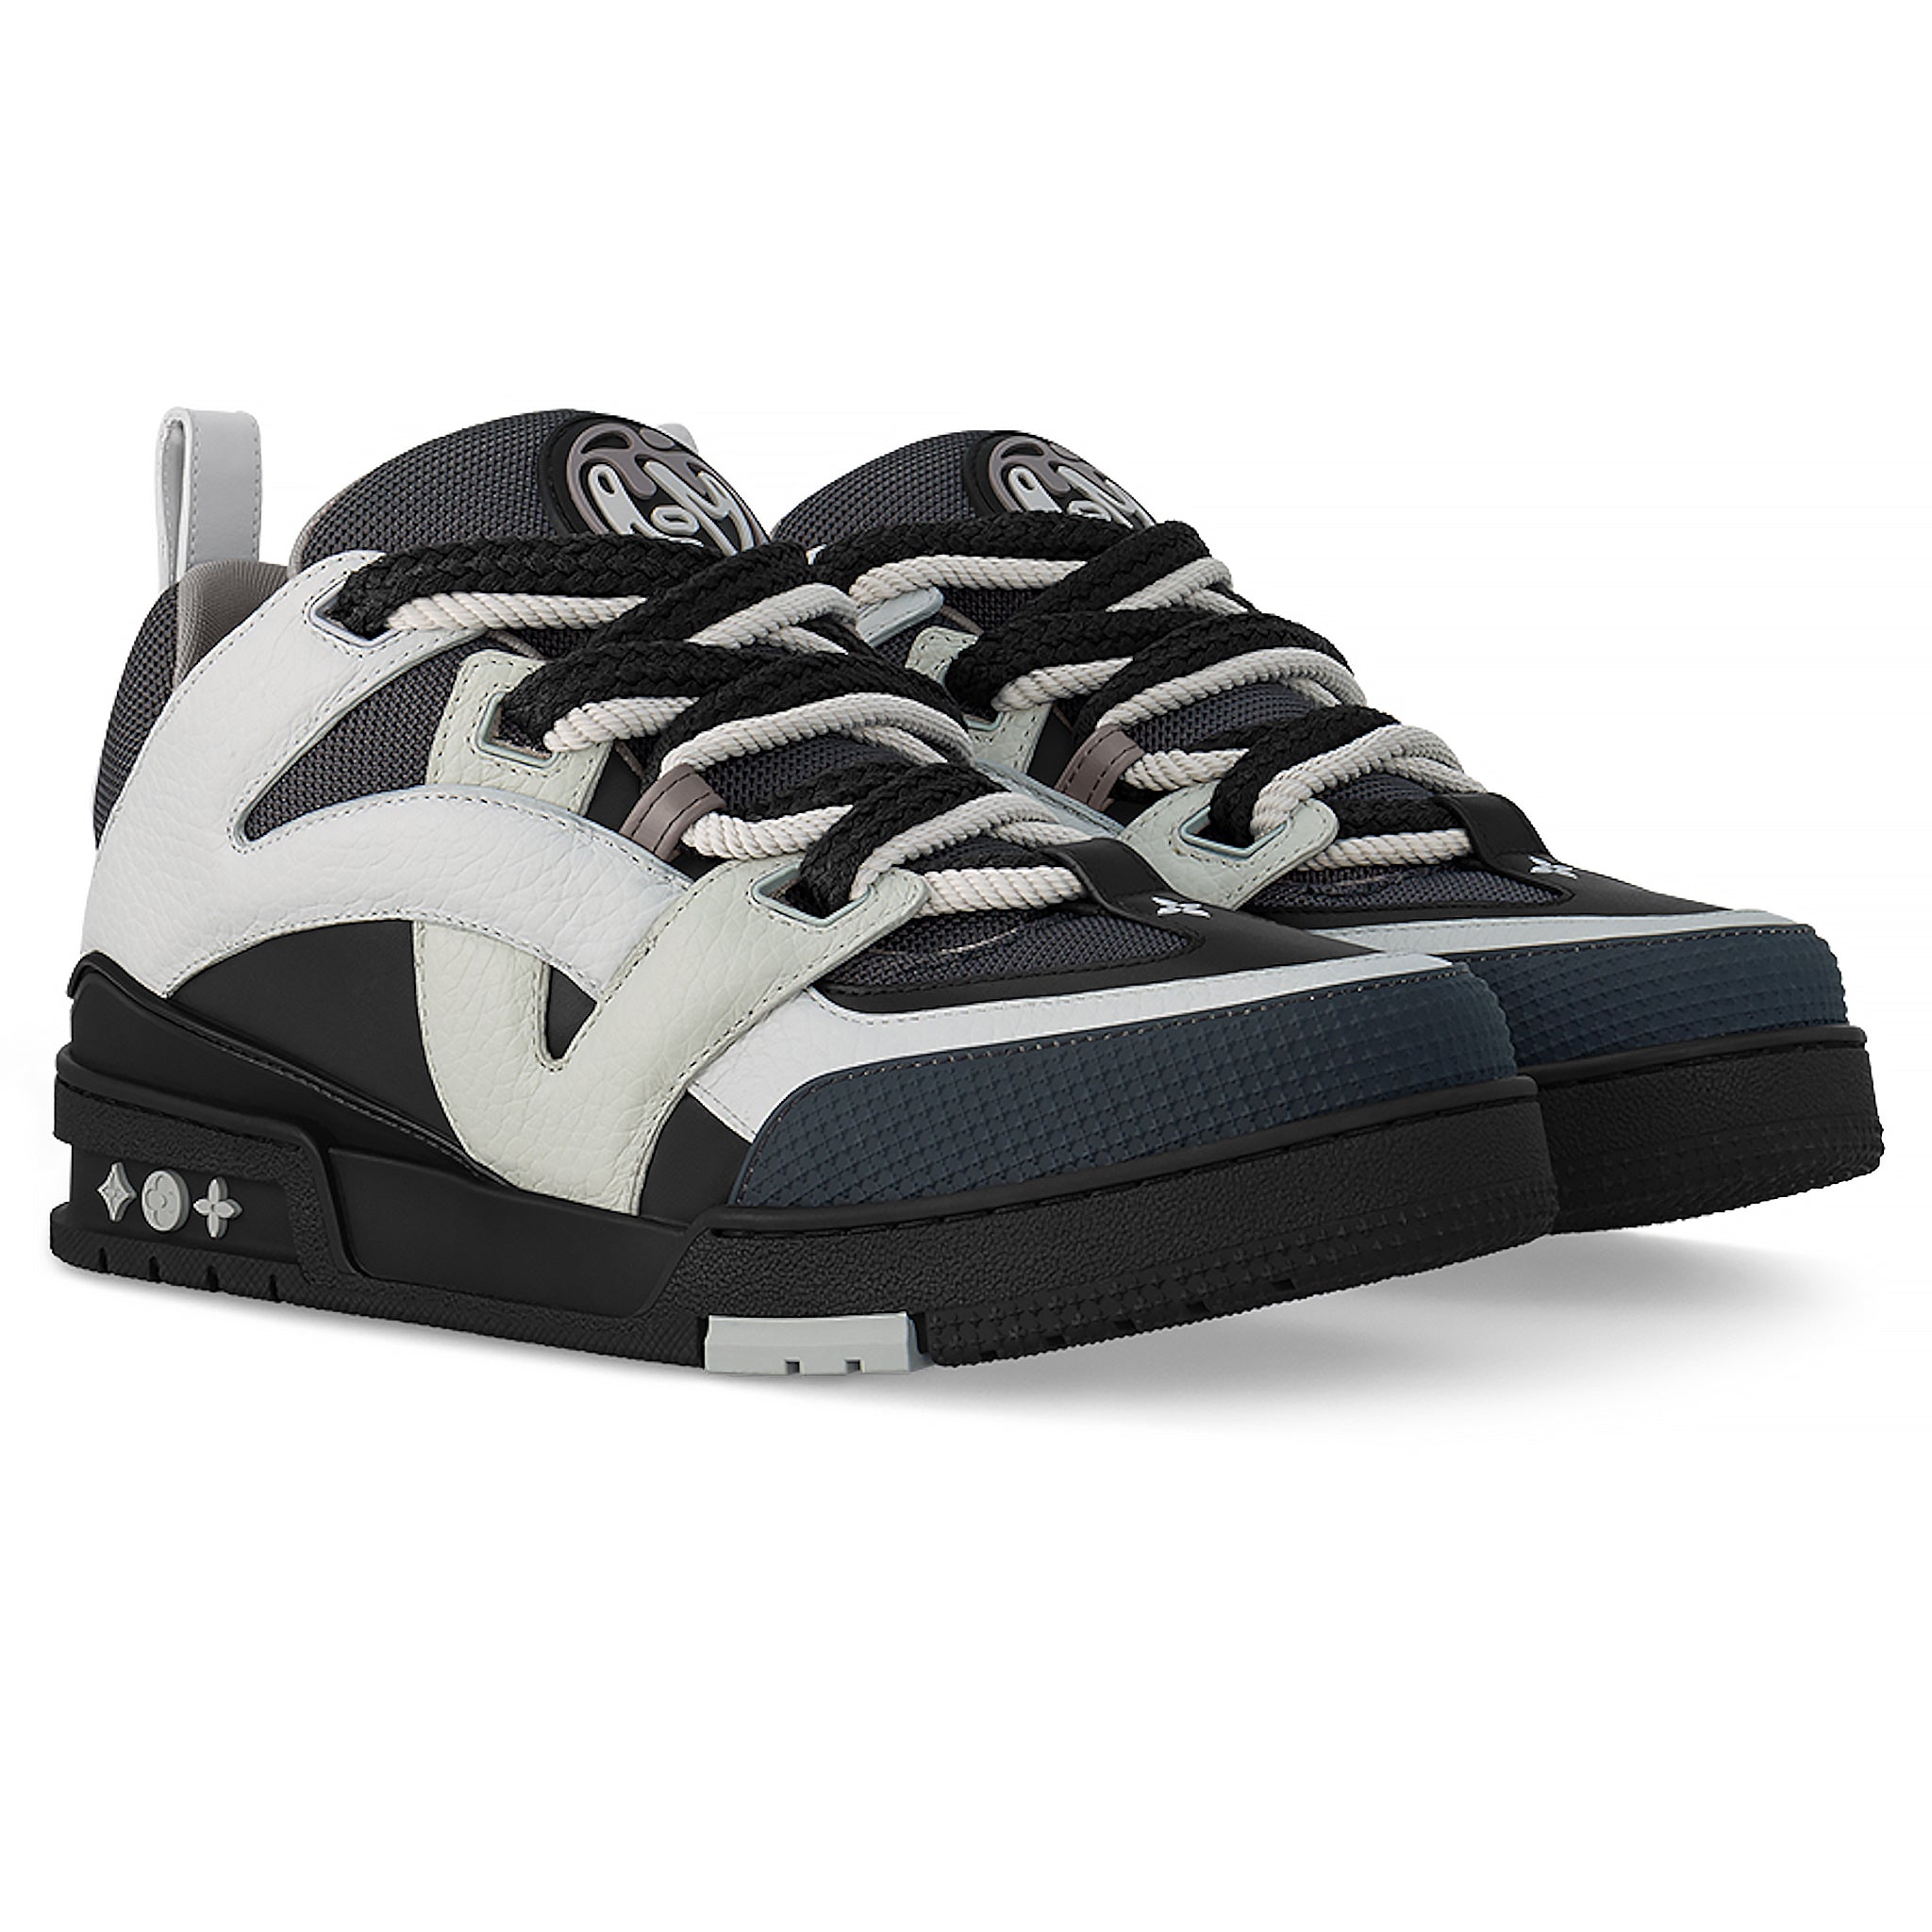 Louis Vuitton LV Skate Sneaker, Beige, 5.5